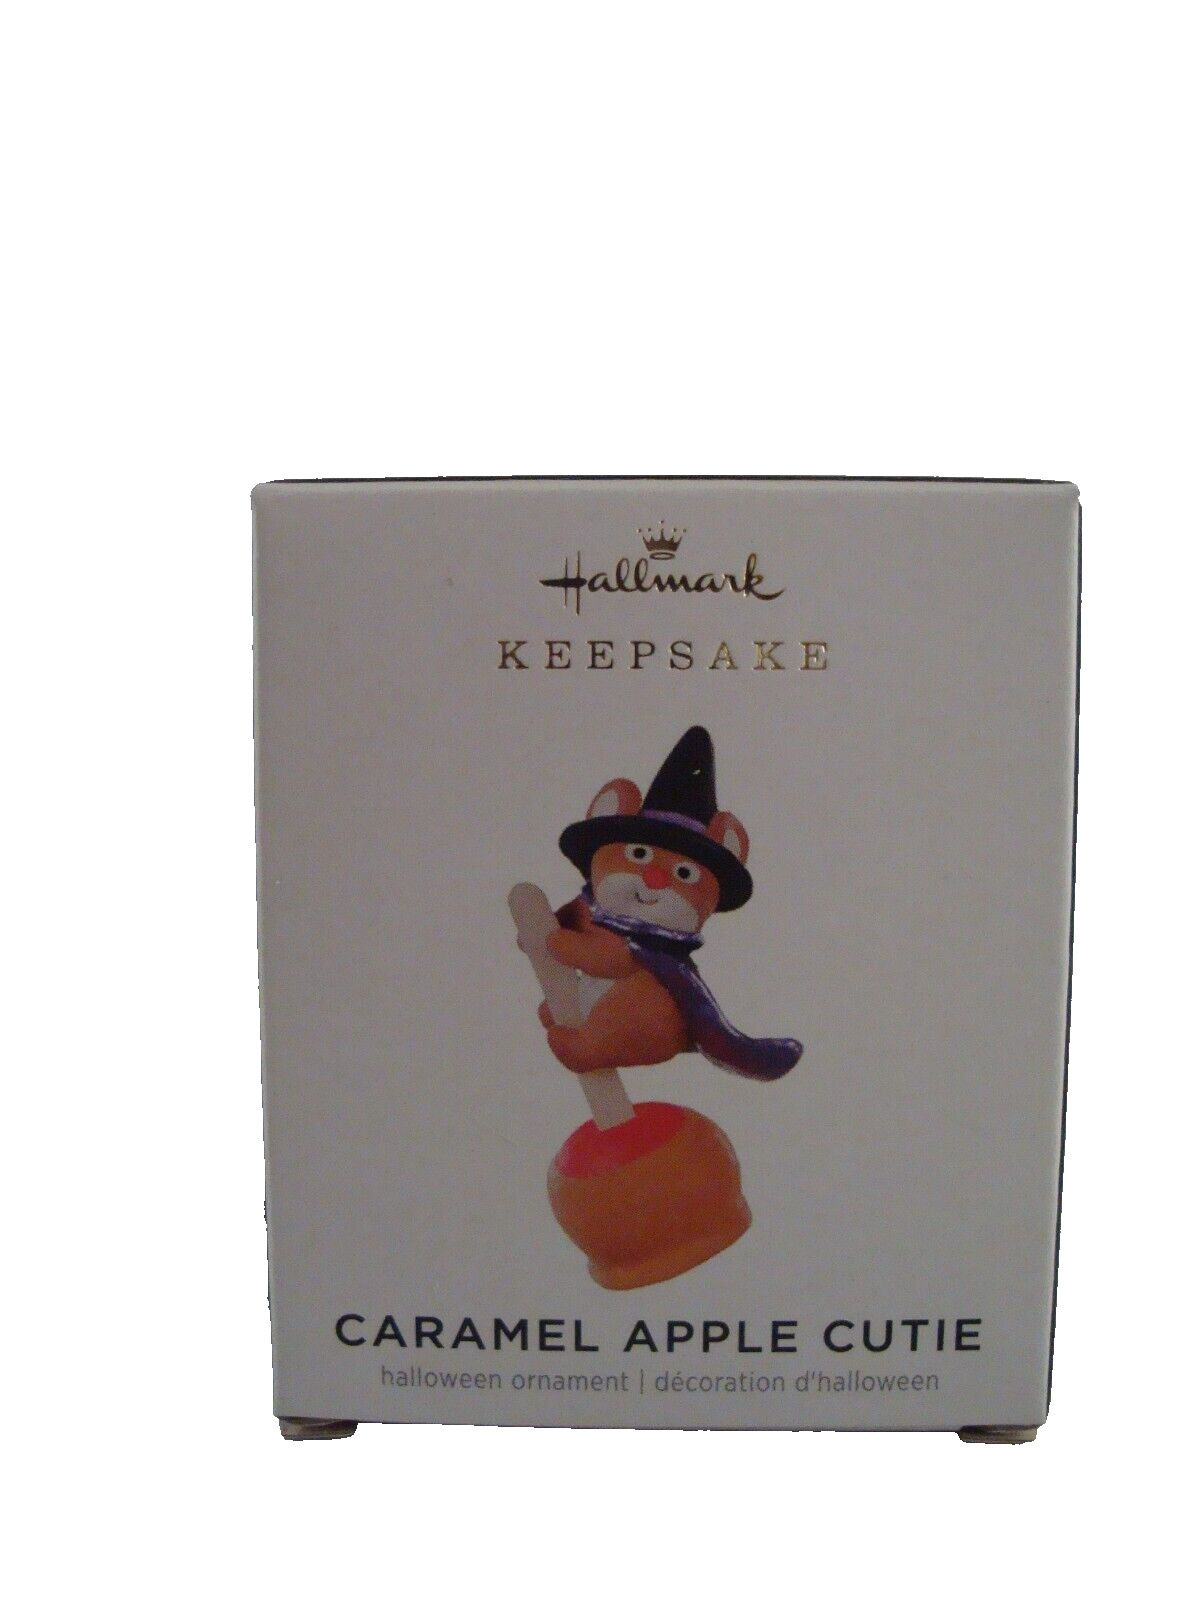 2021 Hallmark Caramel Apple Cutie Halloween Ornament New